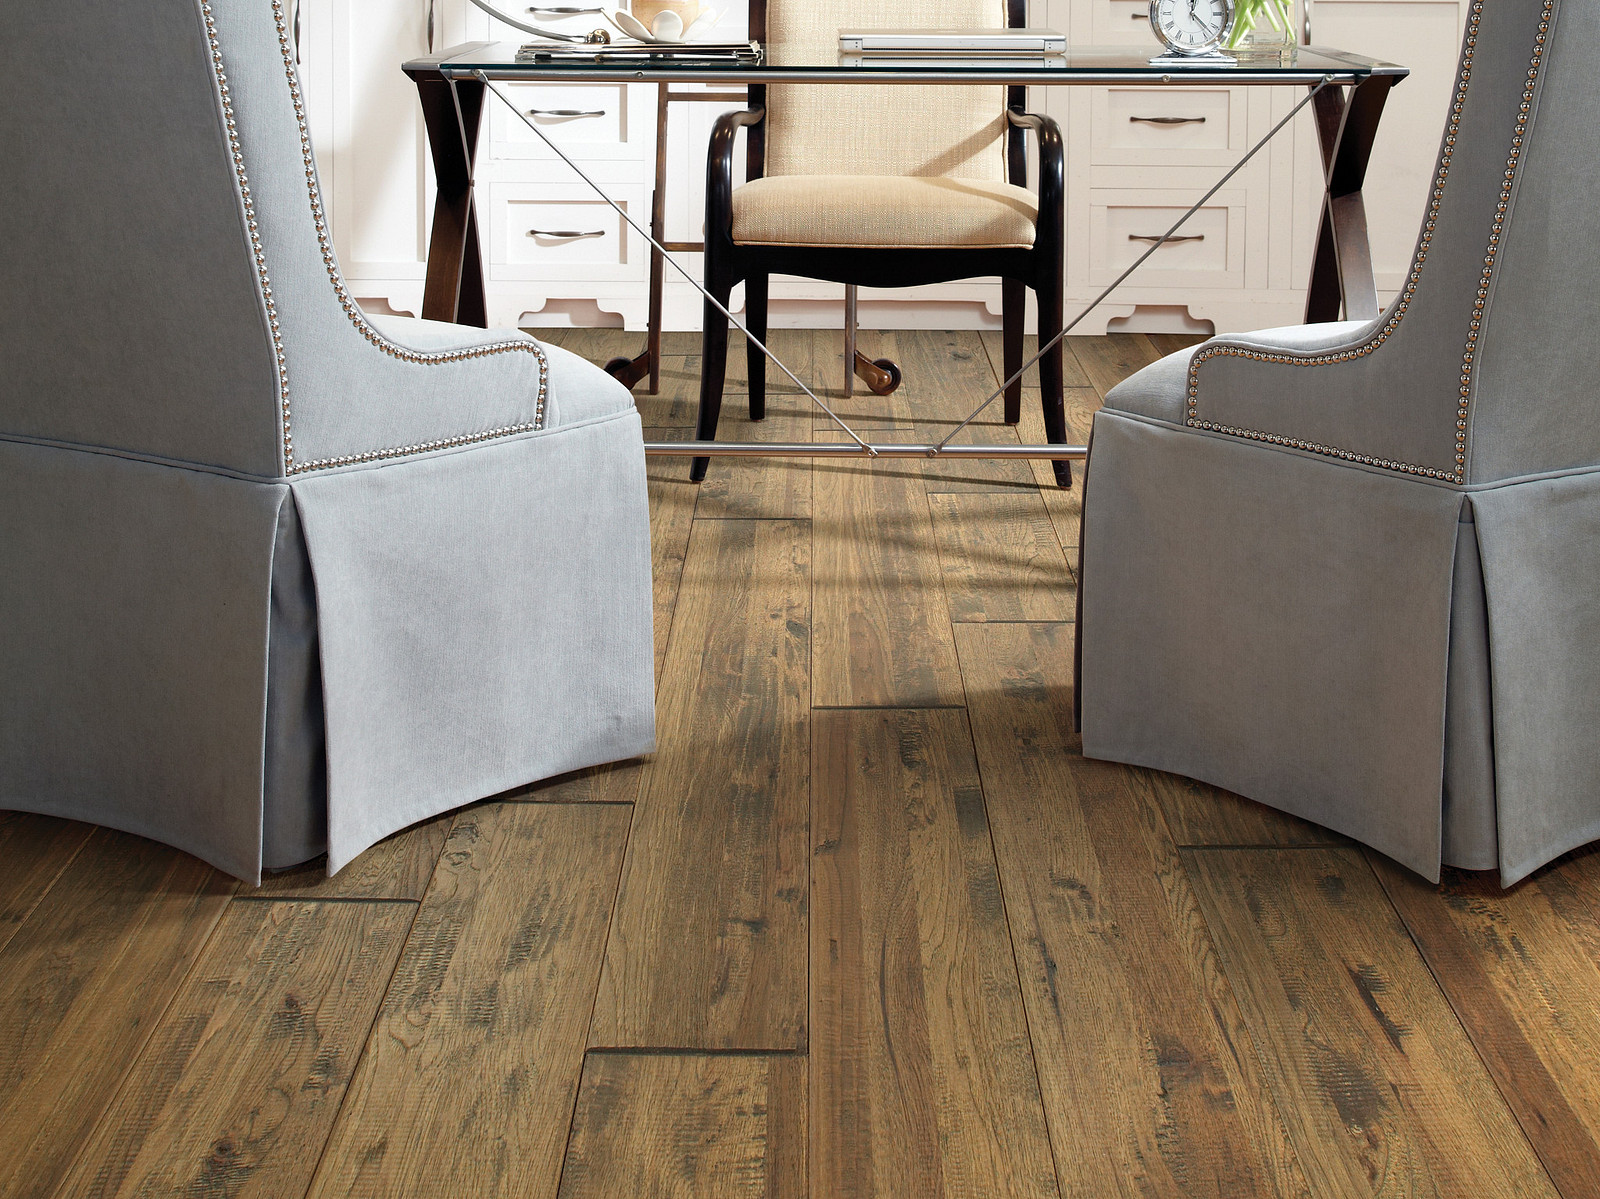 Why Choose Hardwood Flooring?